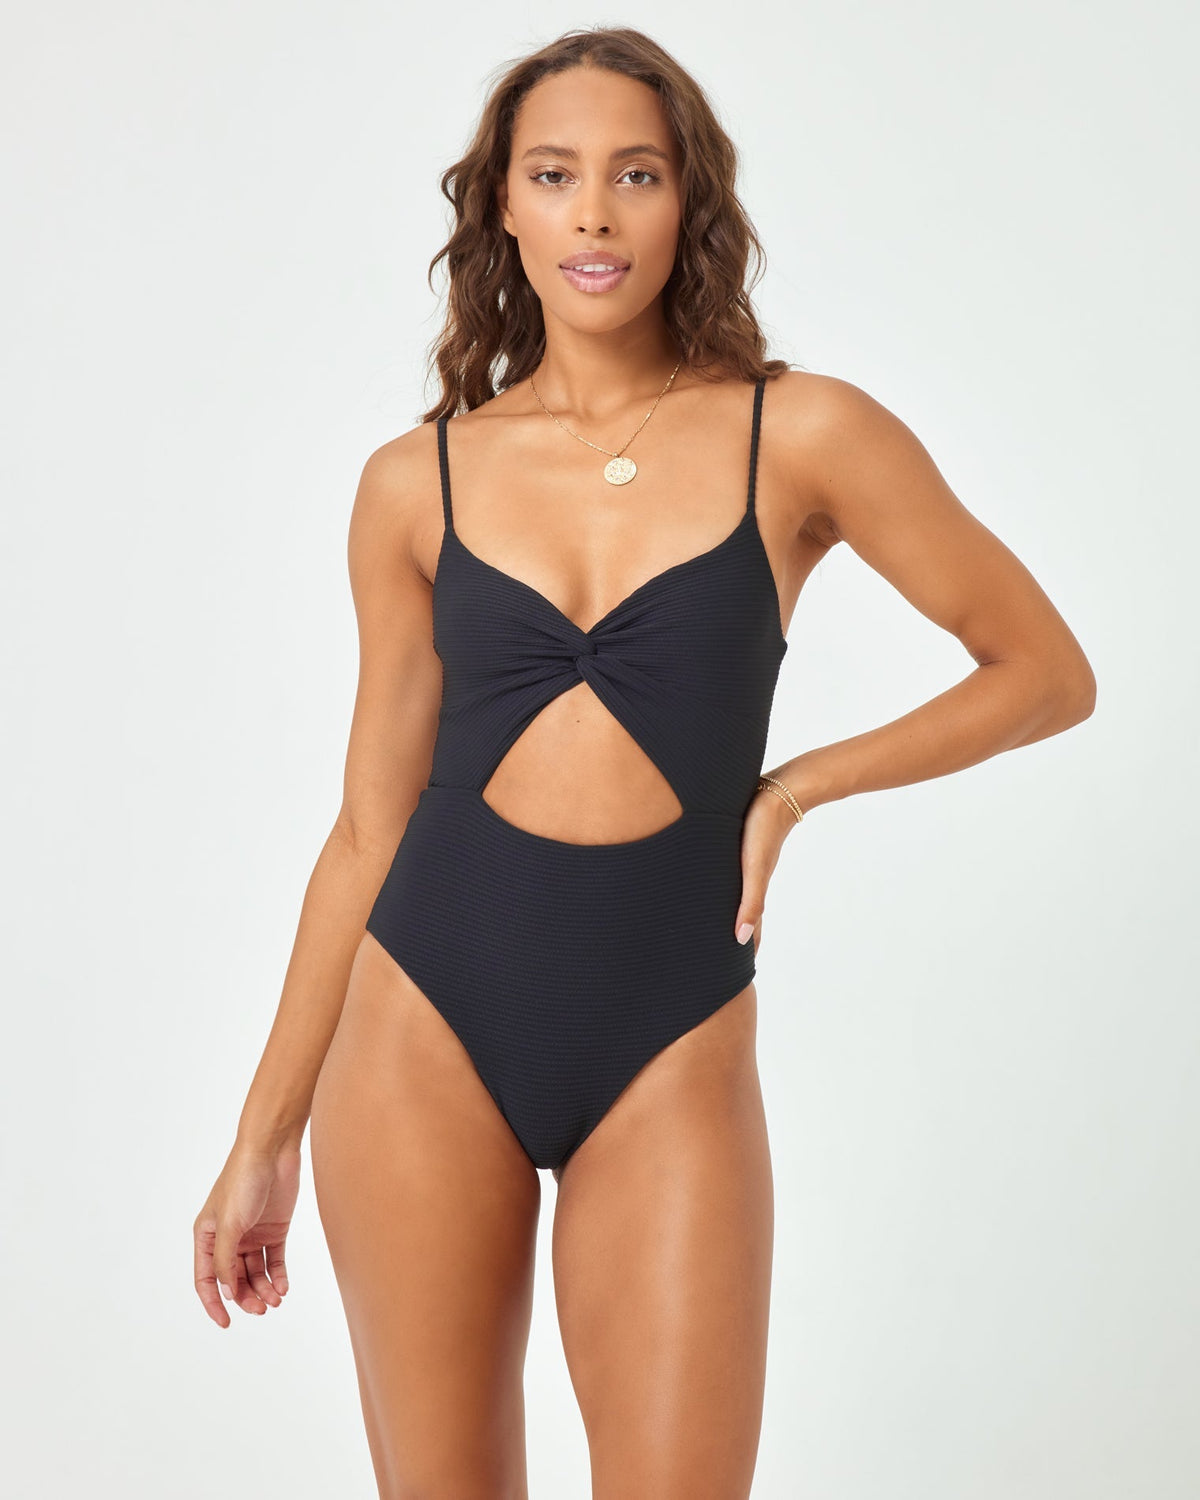 Eco Chic Repreve® Kyslee One Piece Swimsuit - Black Black | Model: Natalie (size: S)